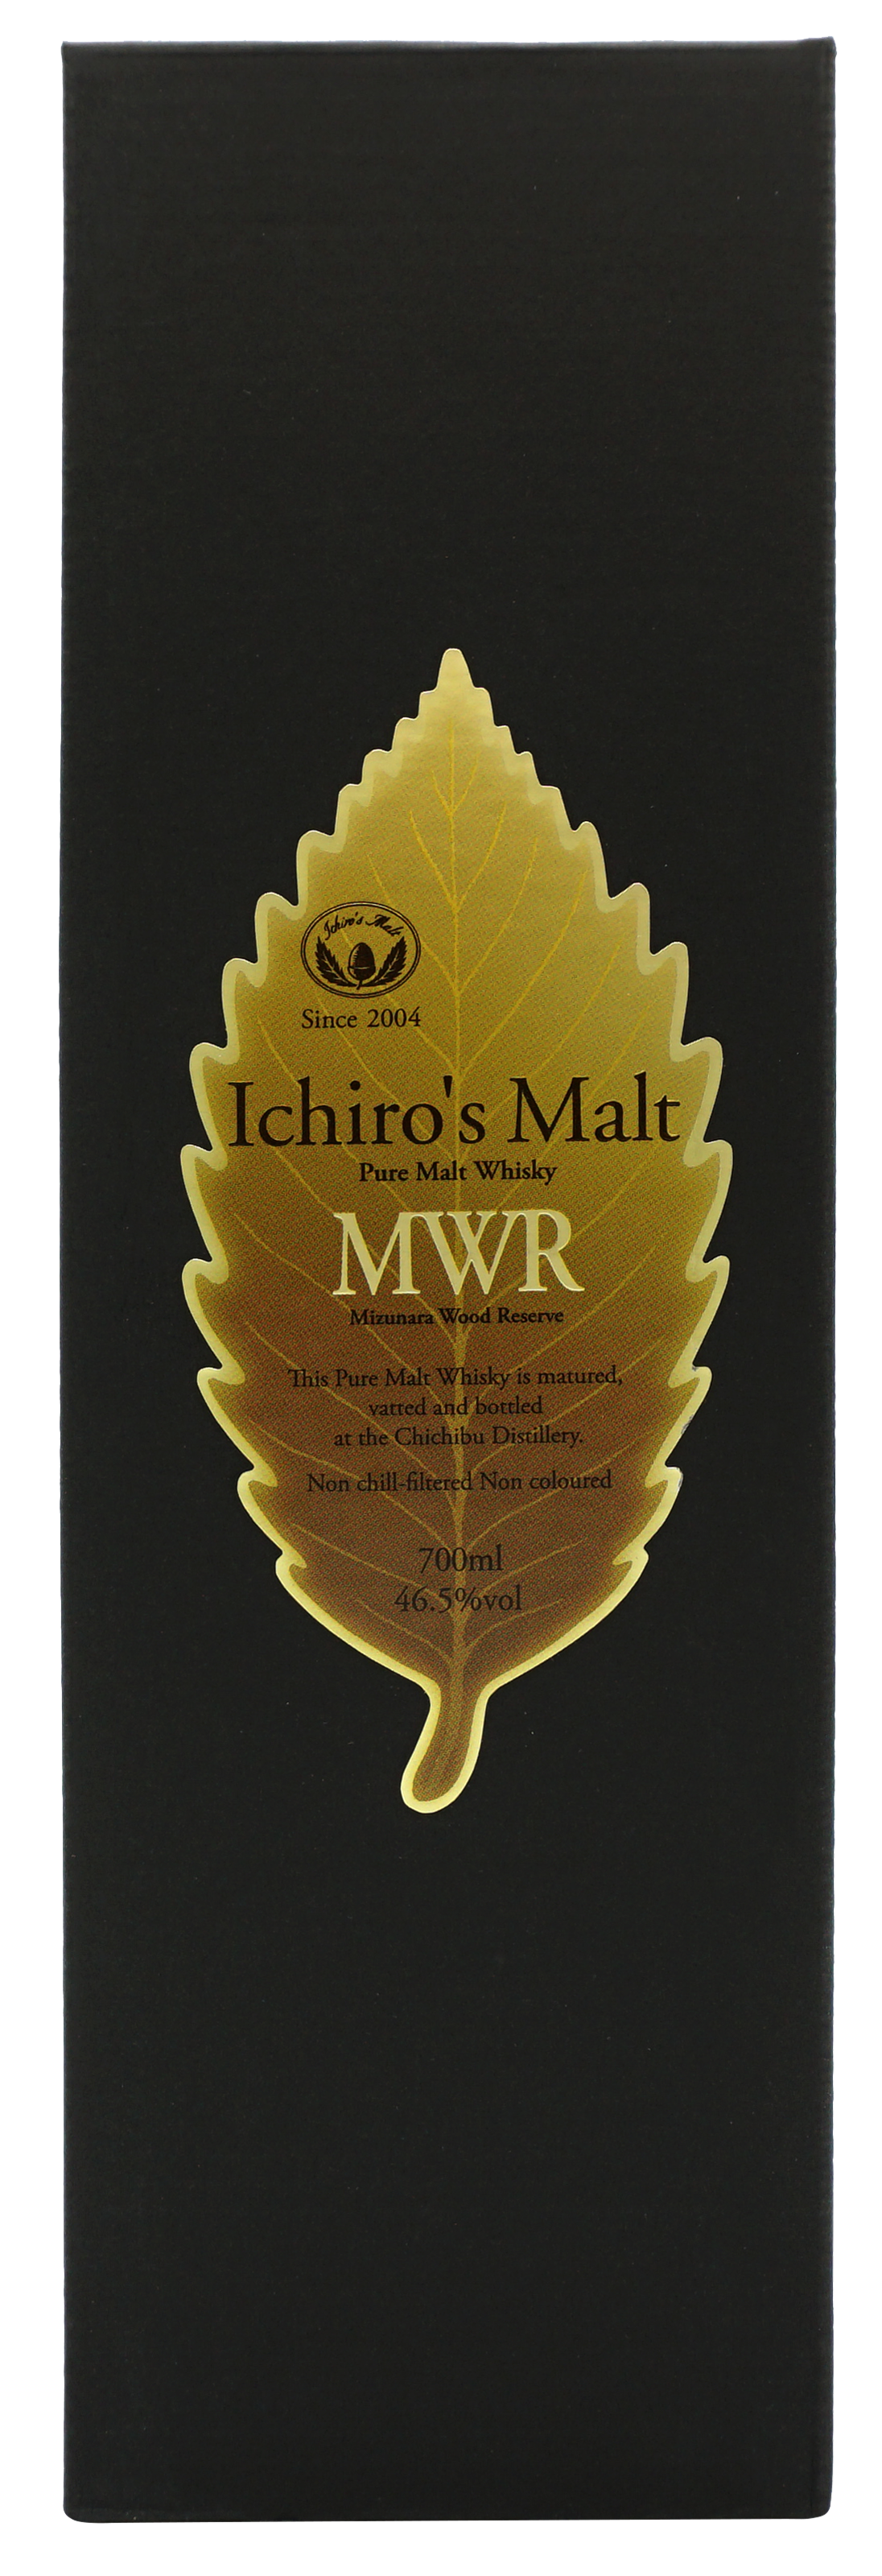 Chichibu Mizunara Wood Reserve Blended Malt 70cl 46 Doos